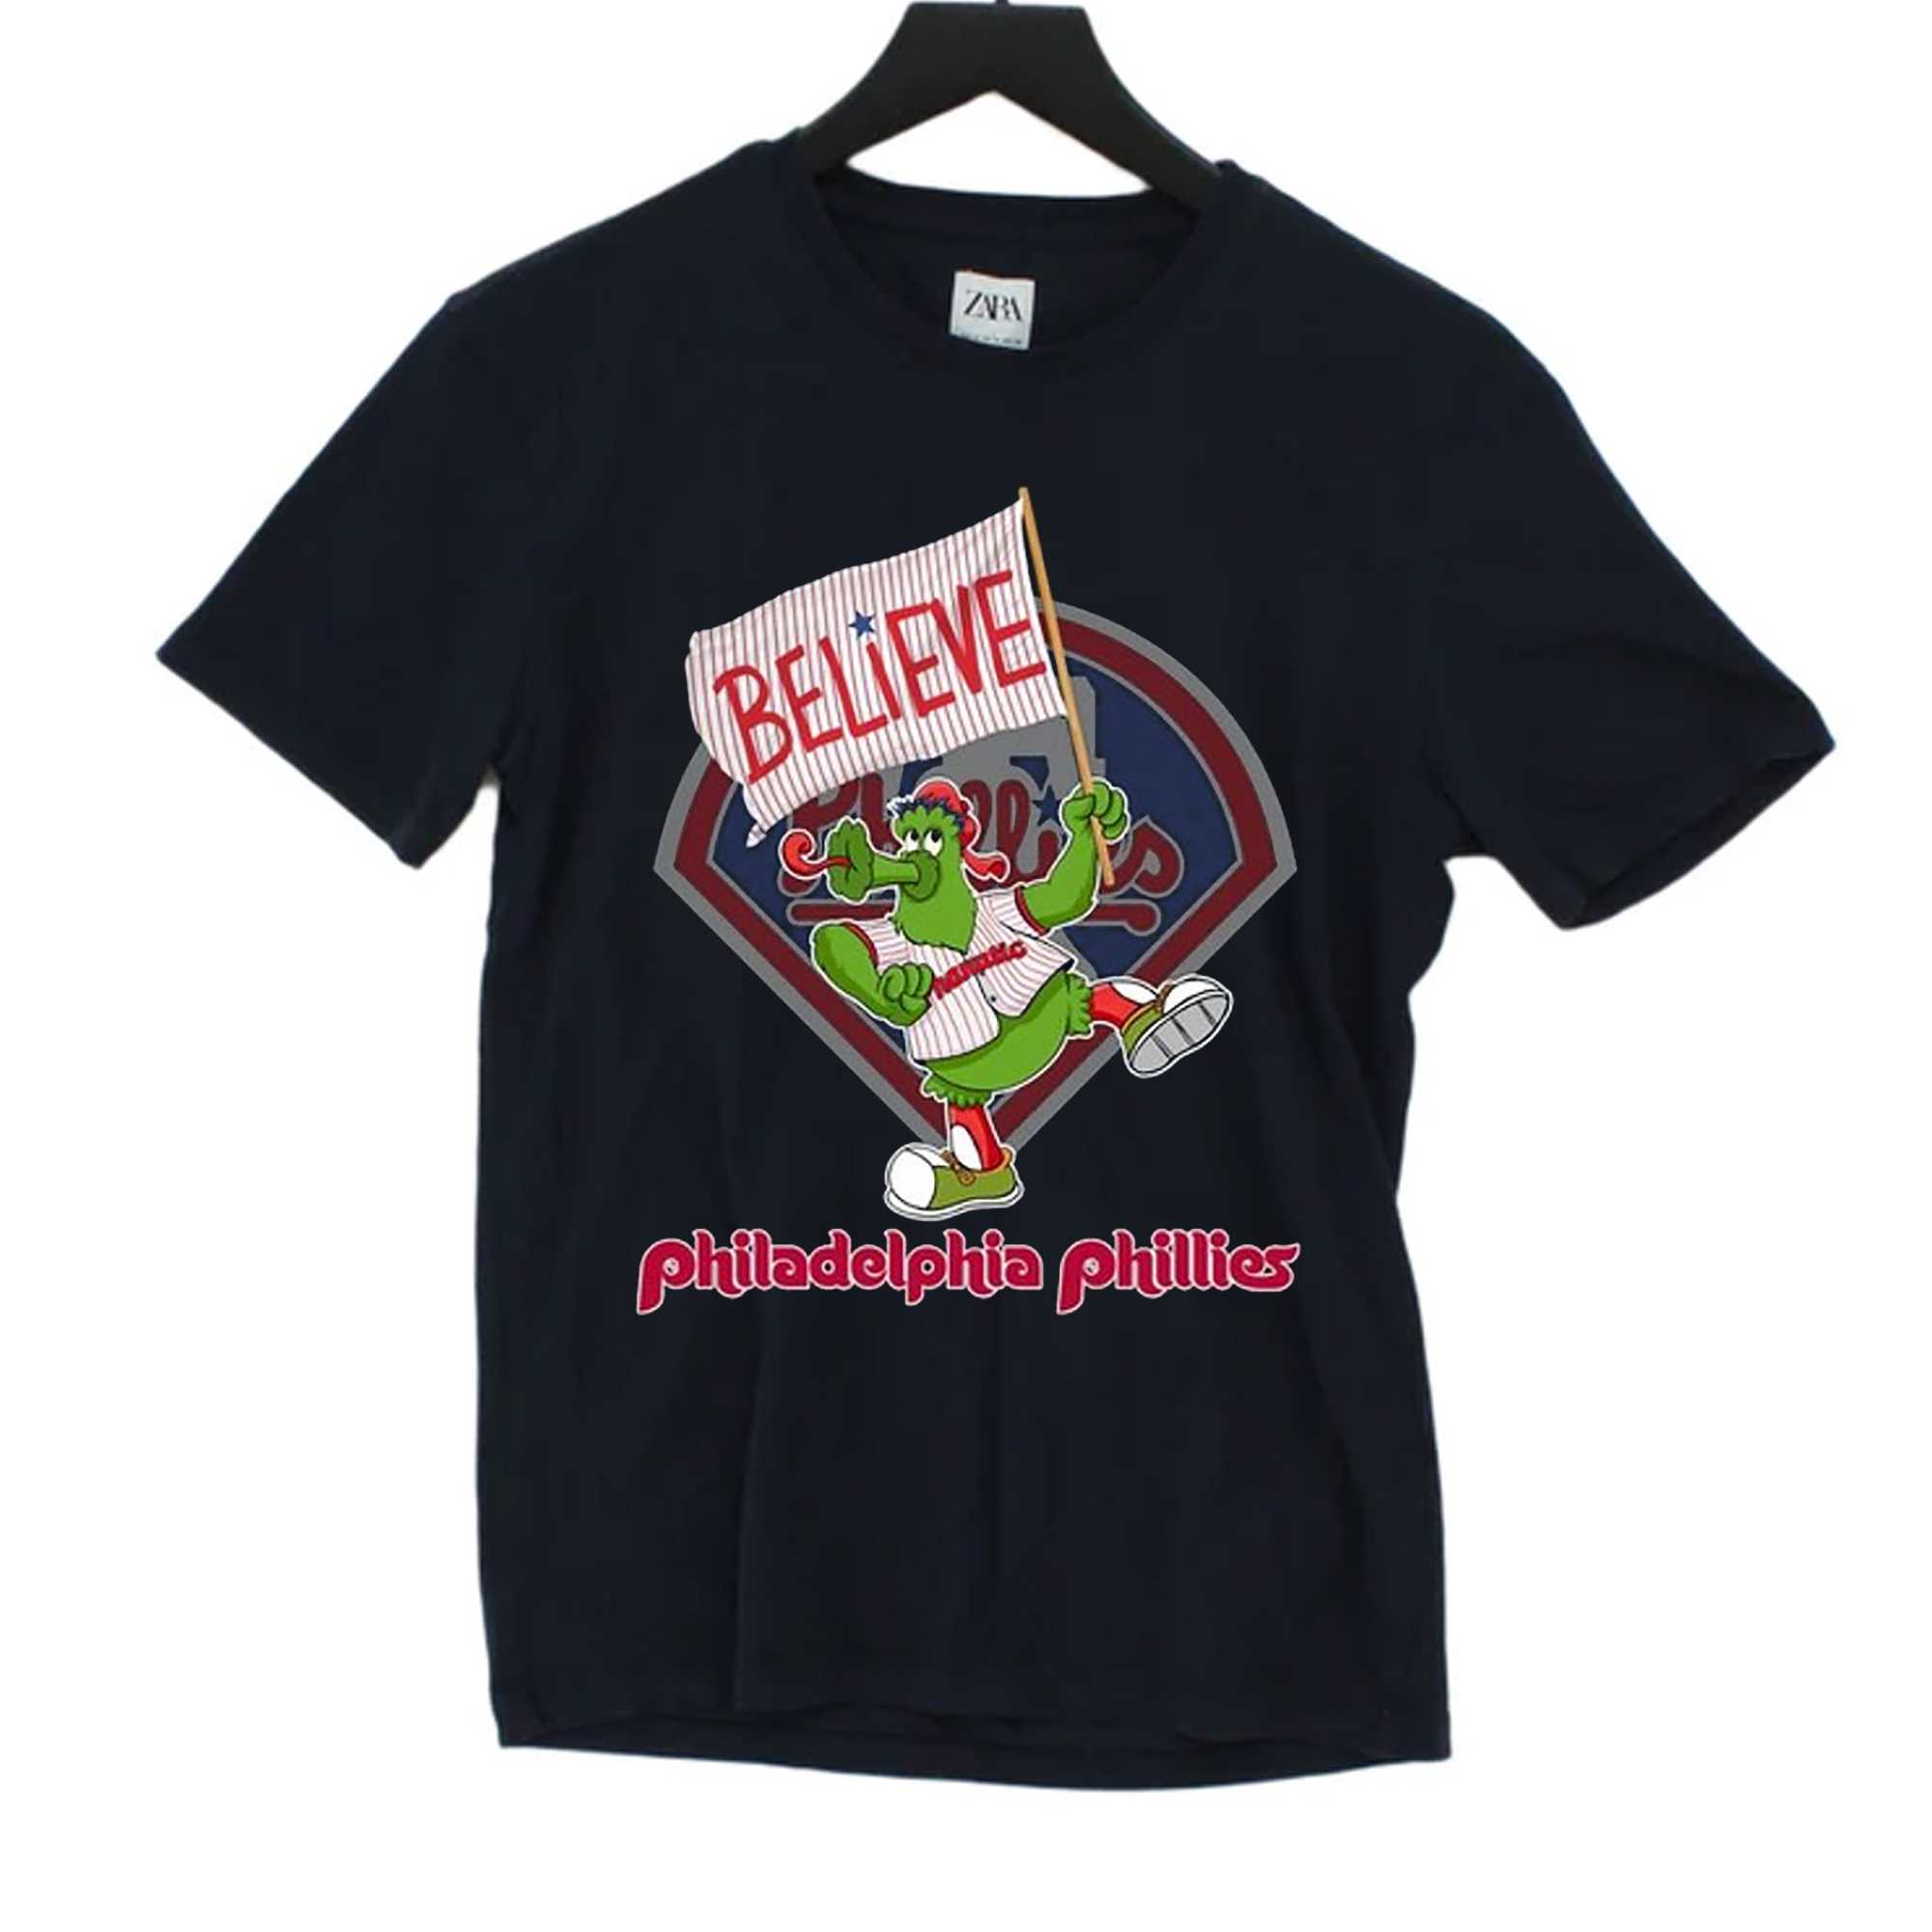 Believe Tee, Philadelphia Phillies Inspired